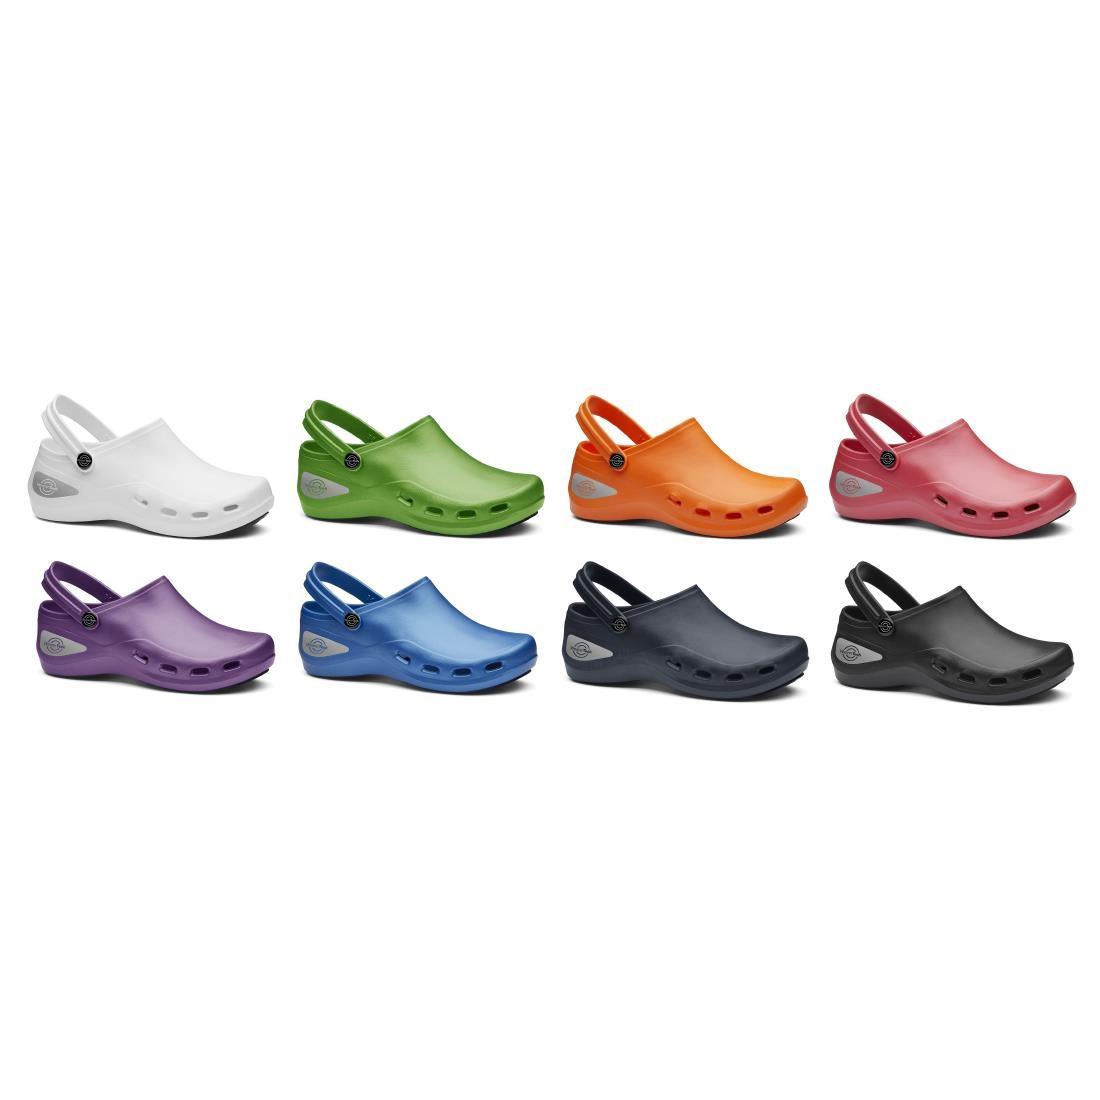 WearerTech Unisex Invigorate Black Safety Shoe Size 7 - BB195-41  - 7